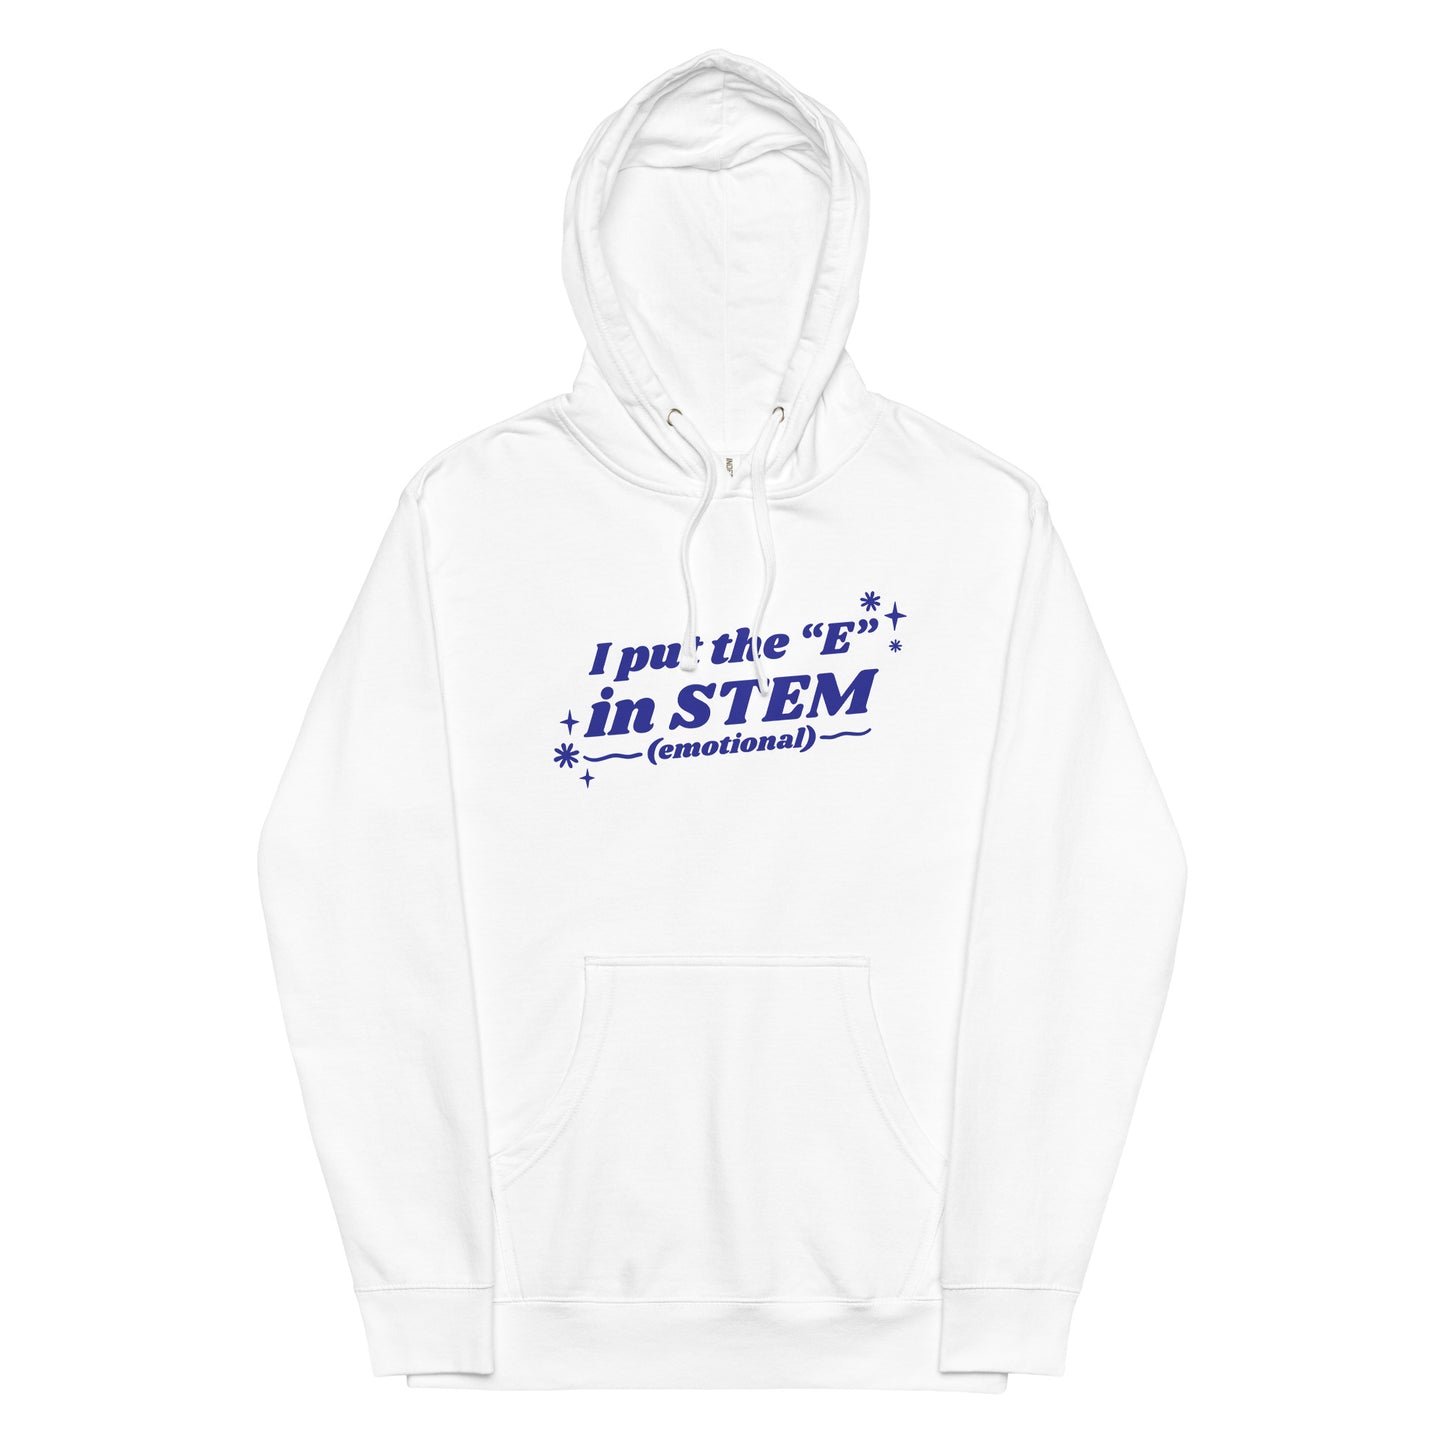 I Put the "E" in STEM Unisex hoodie